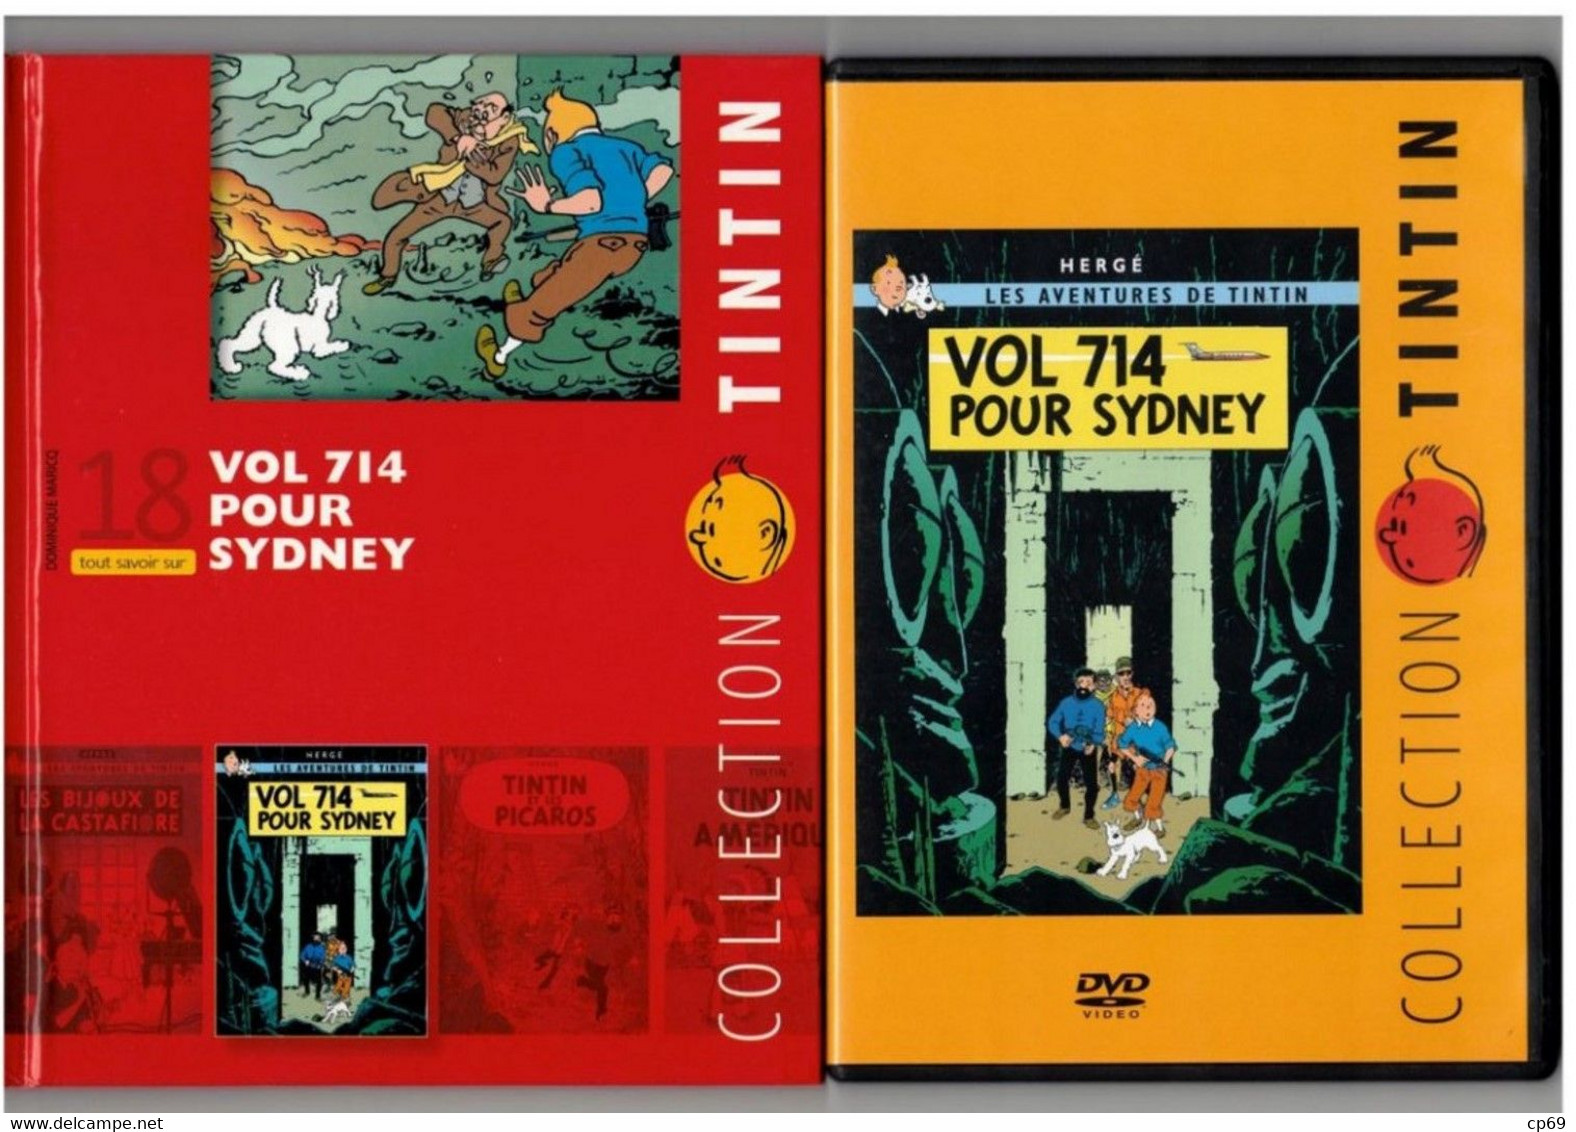 Tintin Hergé/Moulinsart 2010 Milou Chien Dog Cane Vol 714 Pour Sydney N°18 Capitaine Haddock DVD + Livret Explicatif B.E - Cartoni Animati